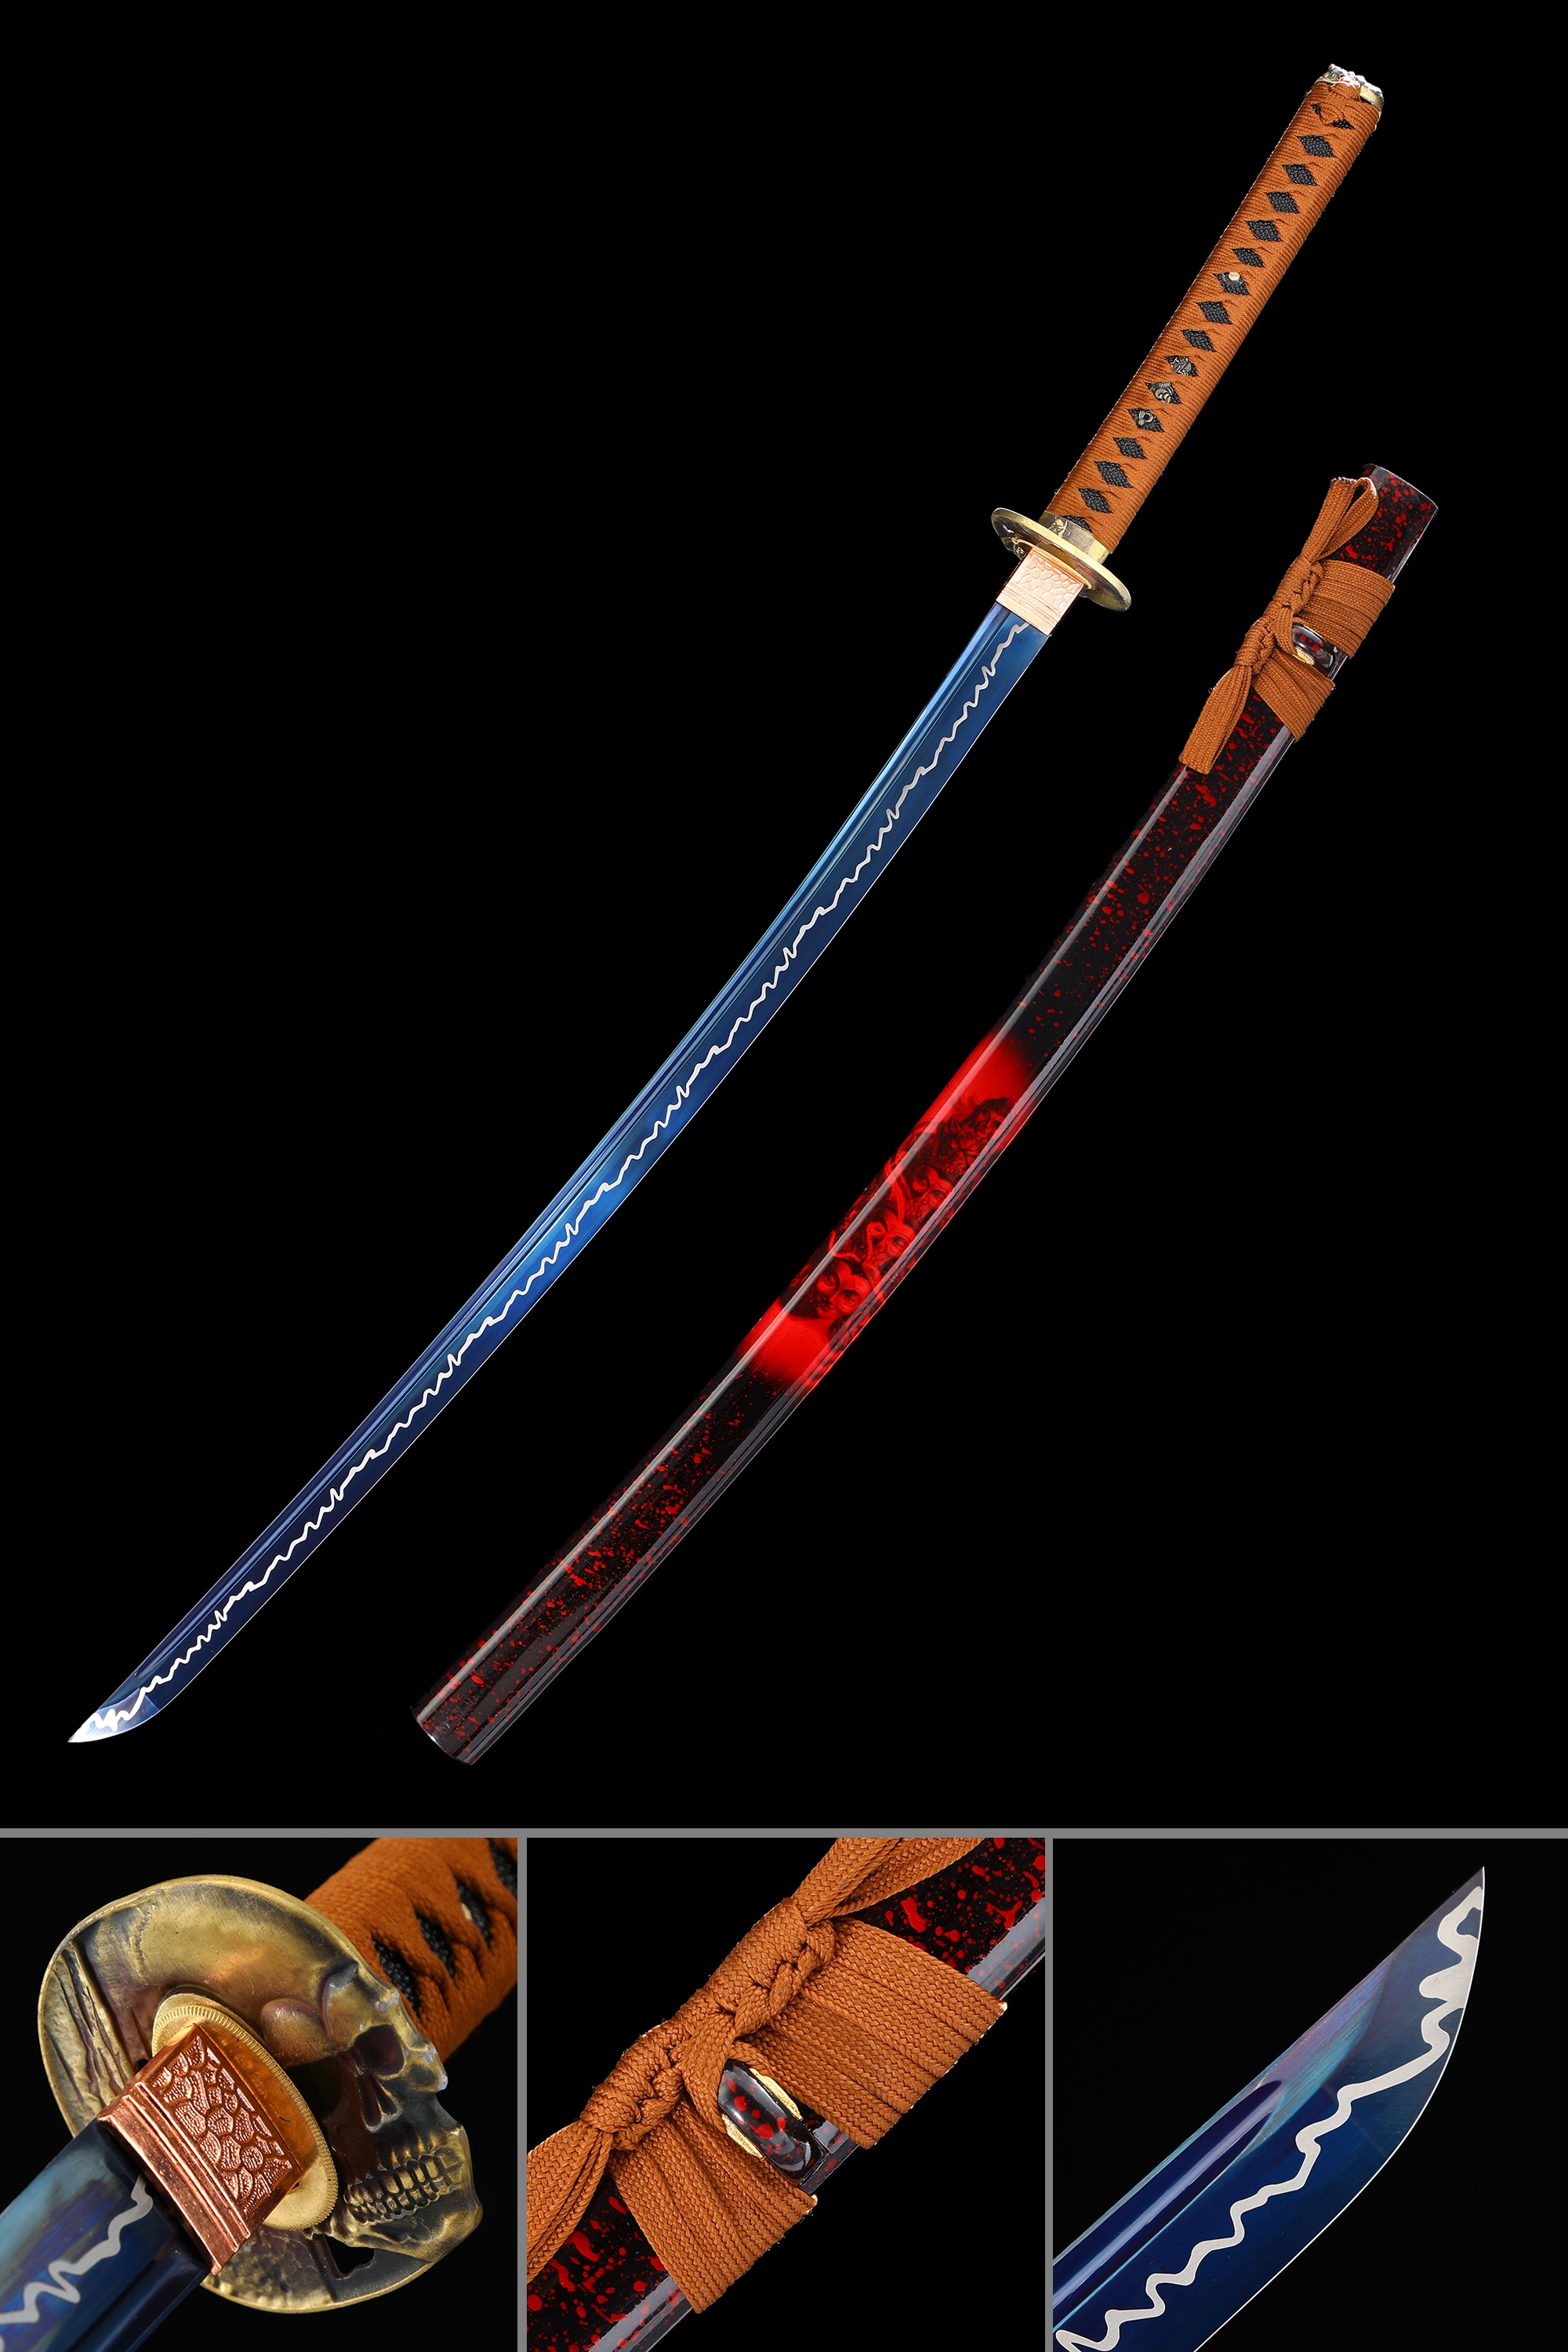 Details about   NEW Katana Handmade Japanese Samurai Sword 1095 High Carbon Steel Blade Full Tan 